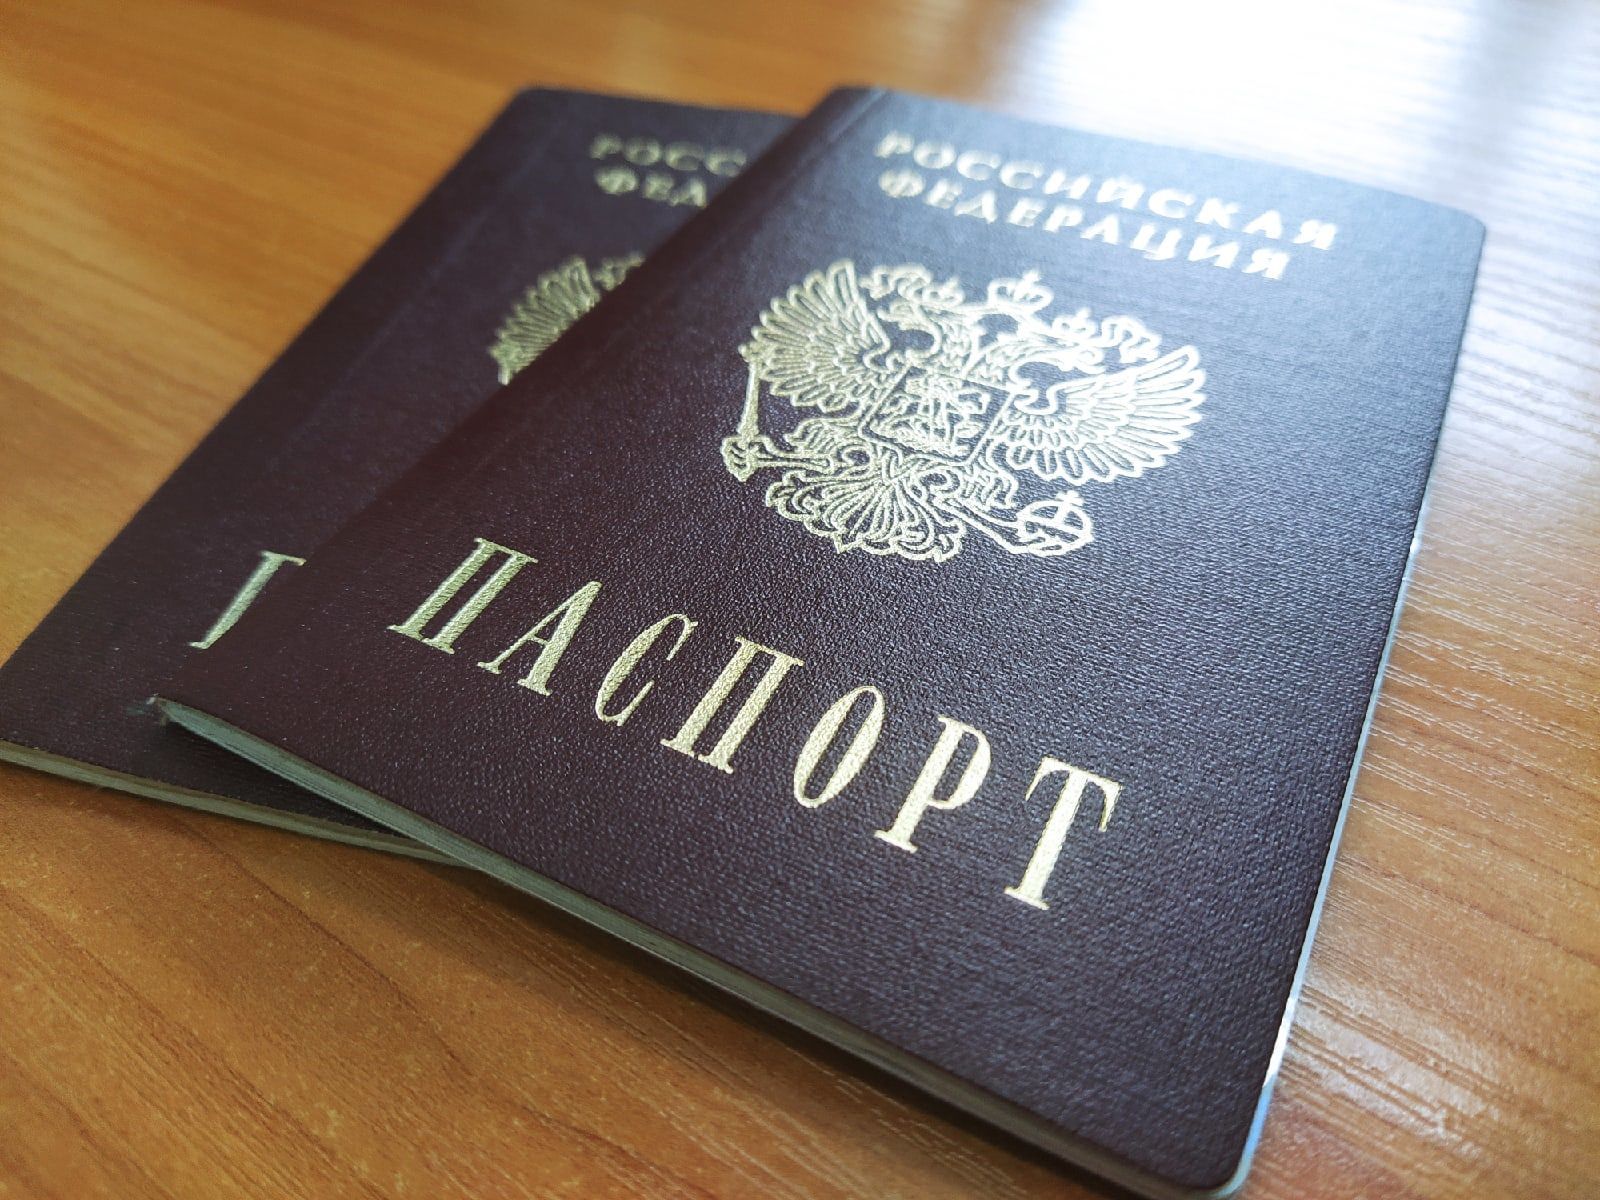 Яңа үрнәктәге паспортларда "милләт" графасы булмаячак